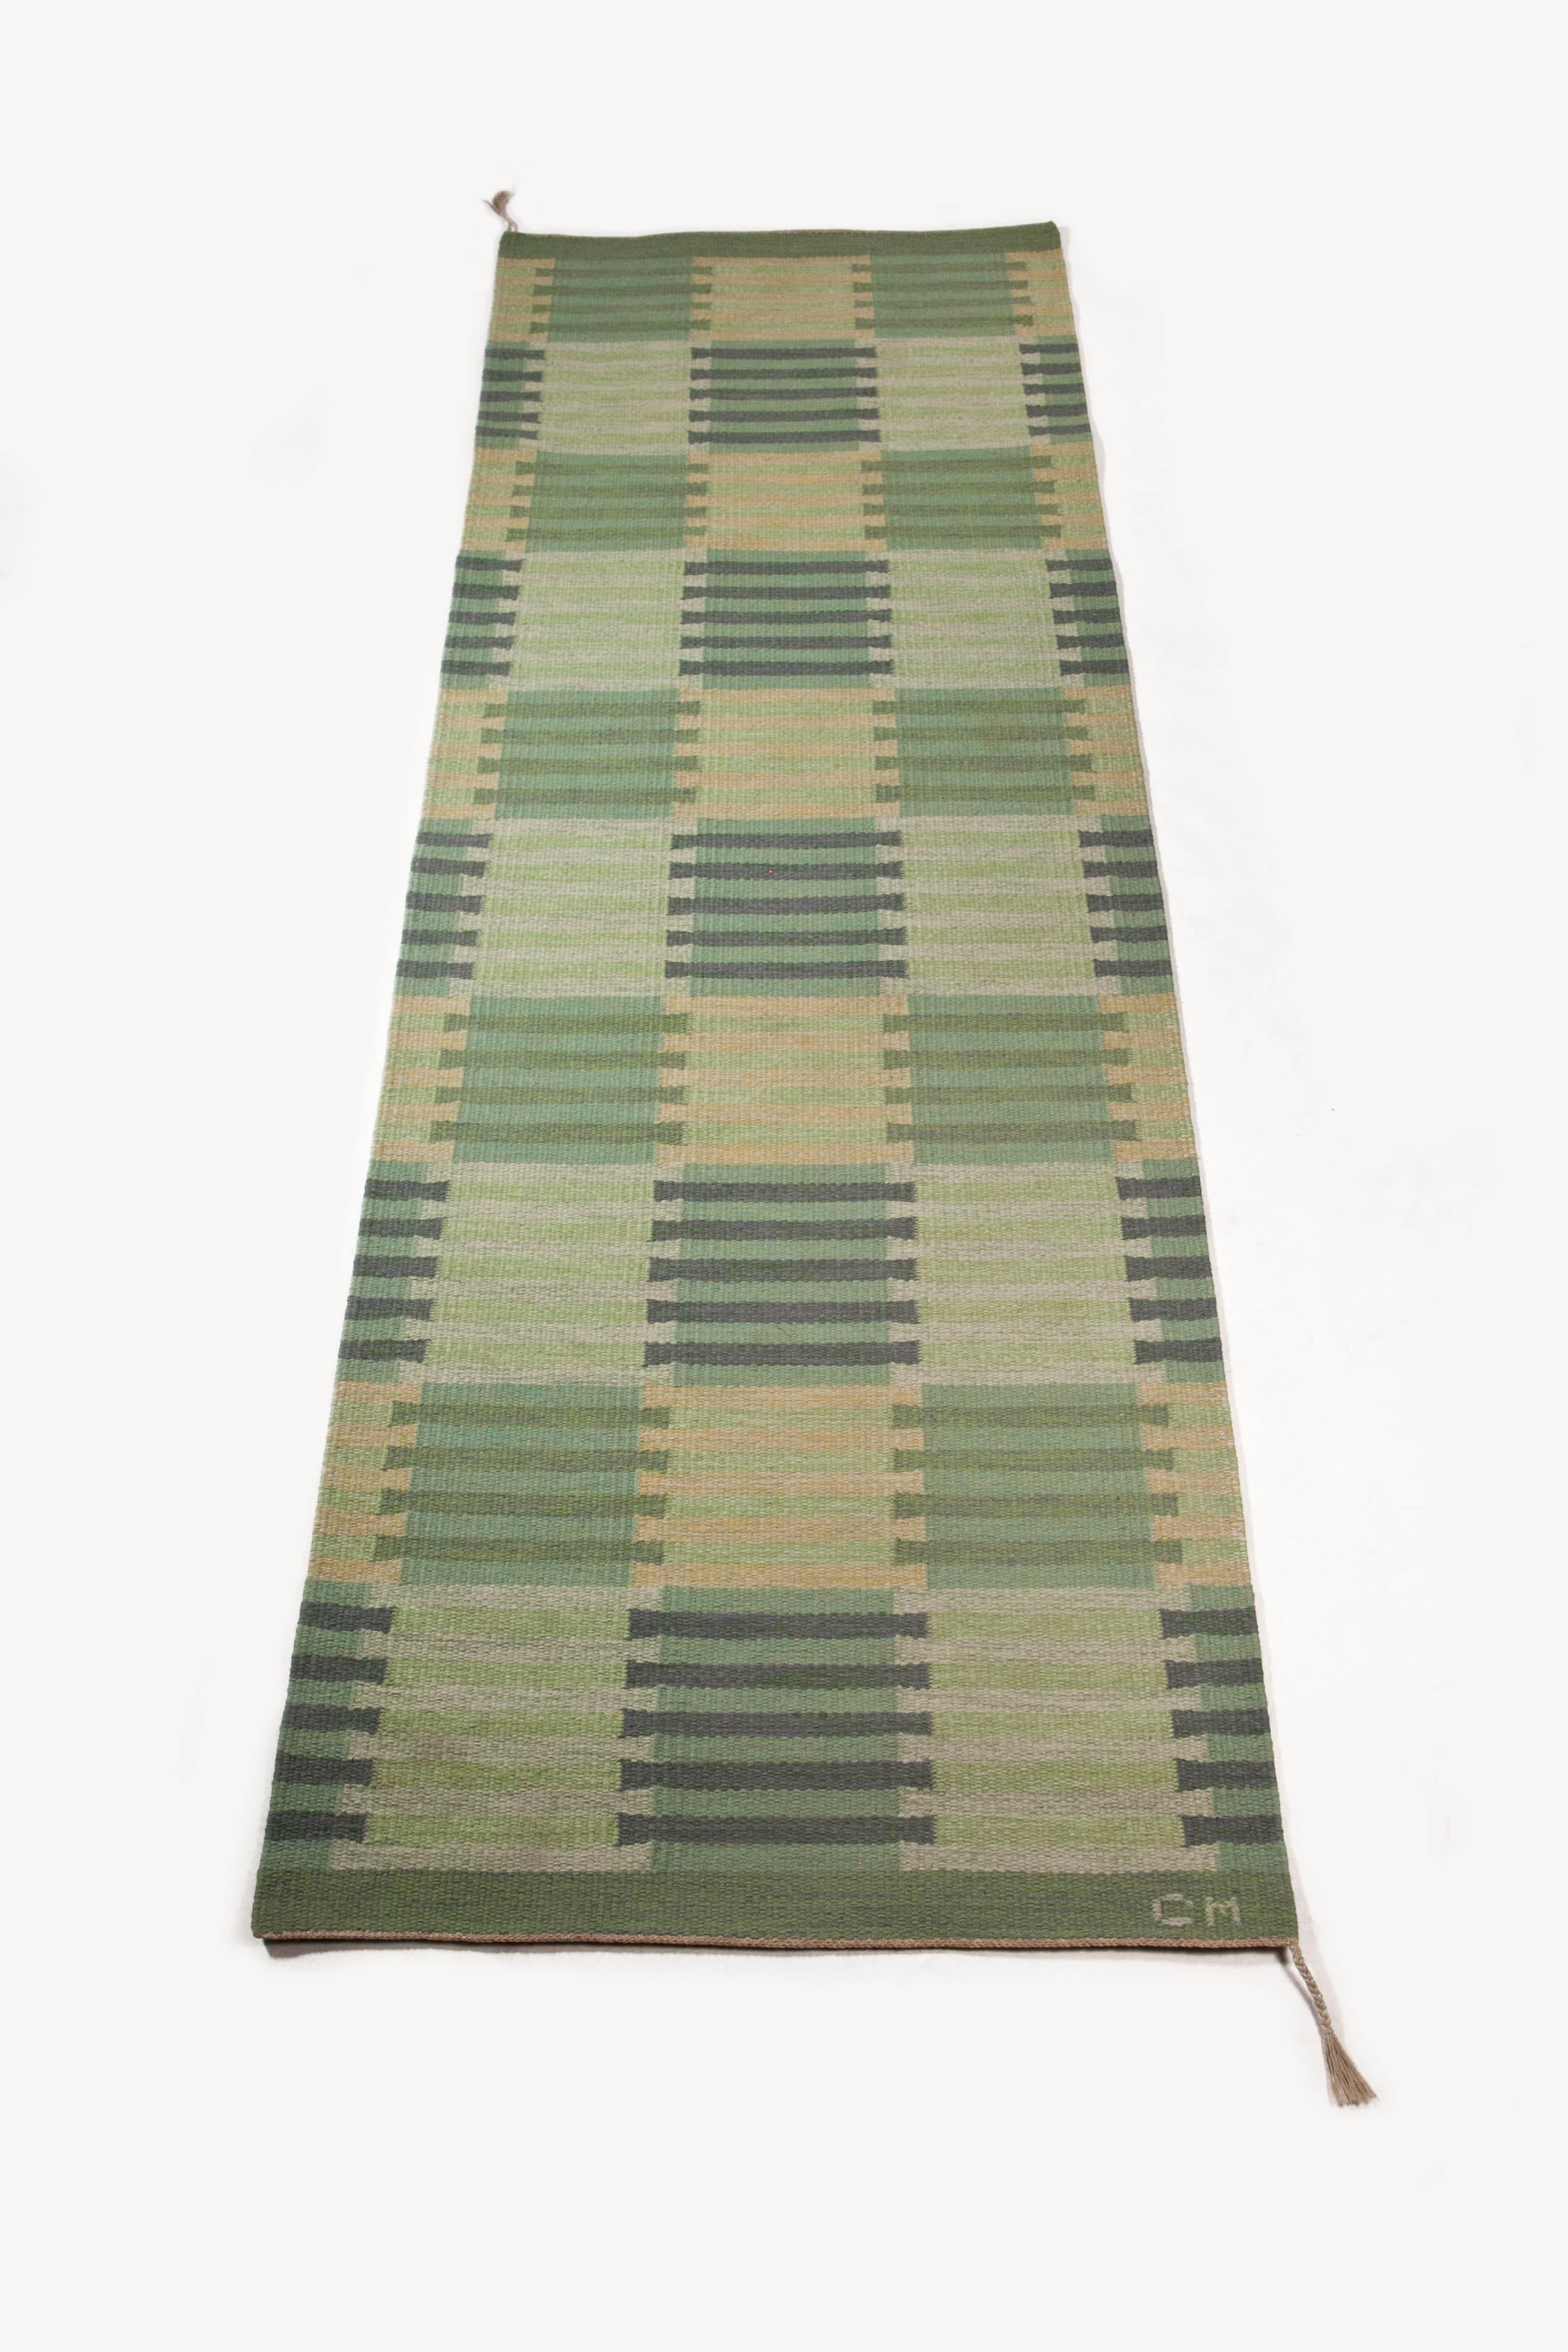 Carl Malmsten Swedish Flat Weave rug 